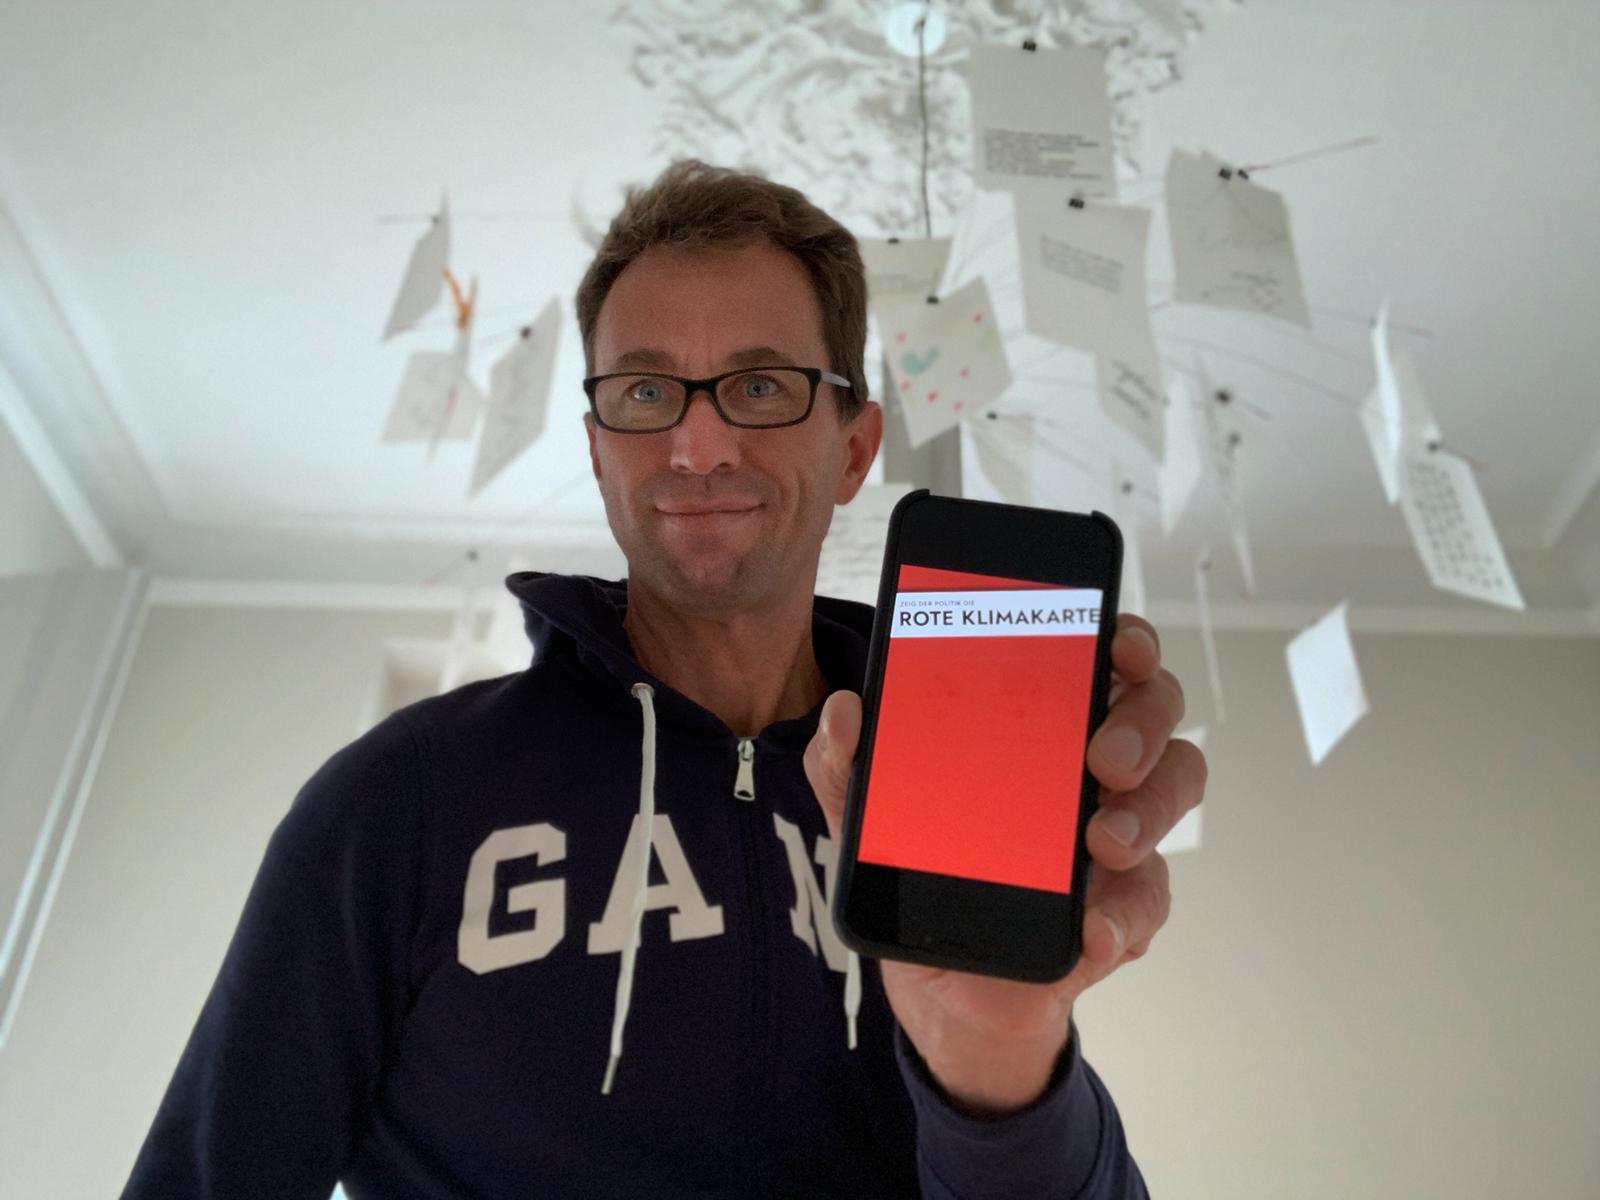 Mensch zeigt Handy mit roter Karte im Display